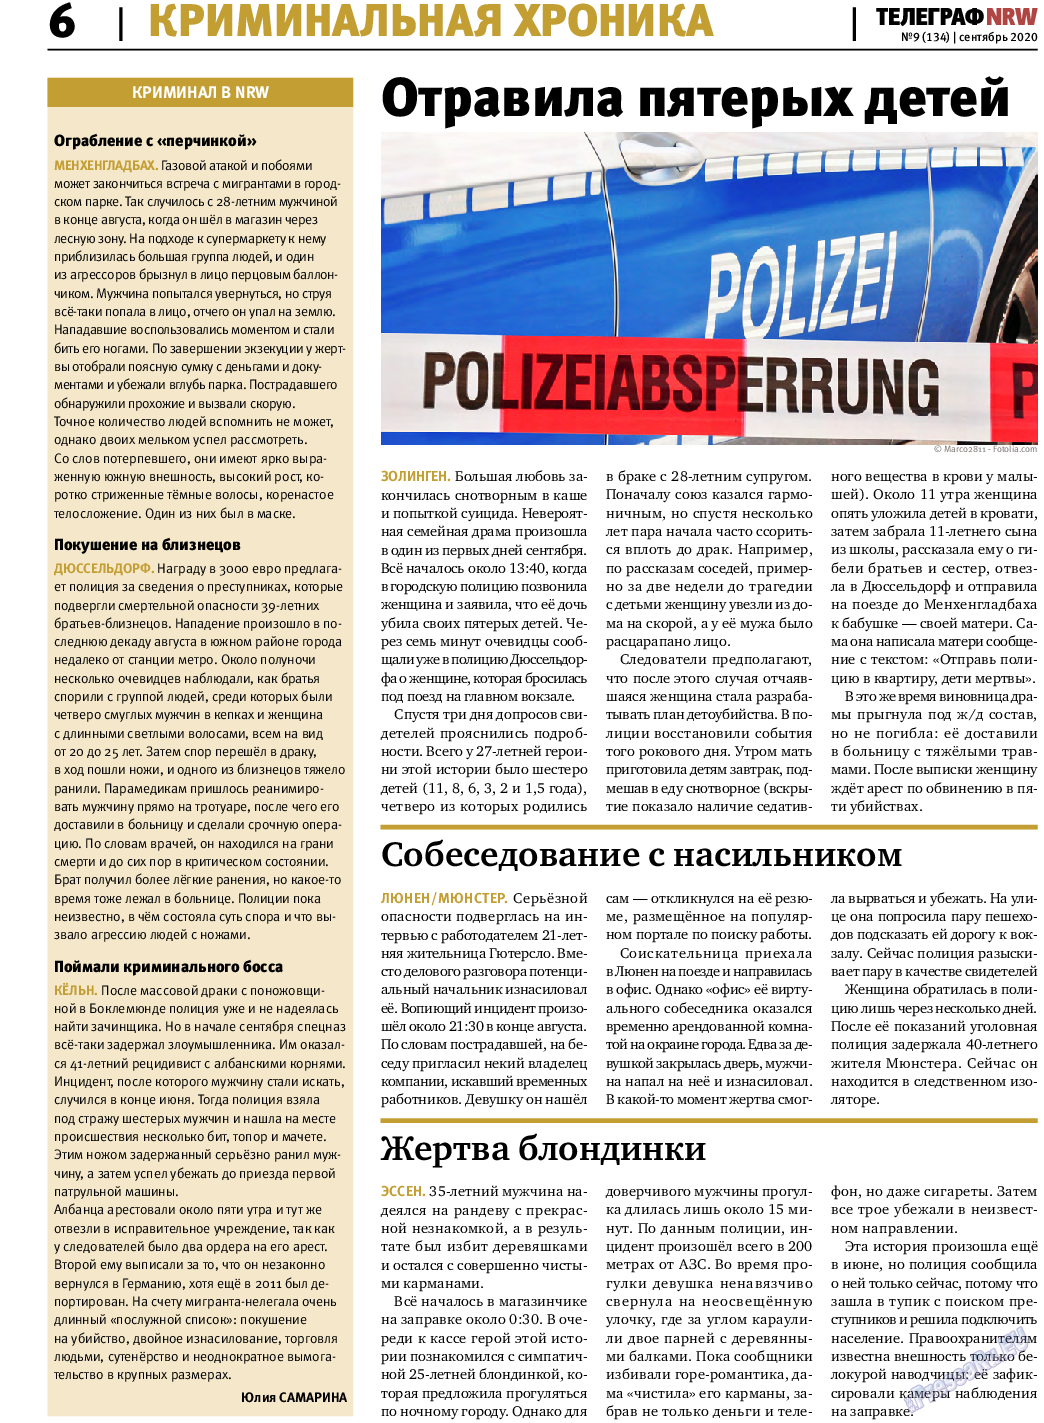 Телеграф NRW, газета. 2020 №9 стр.6